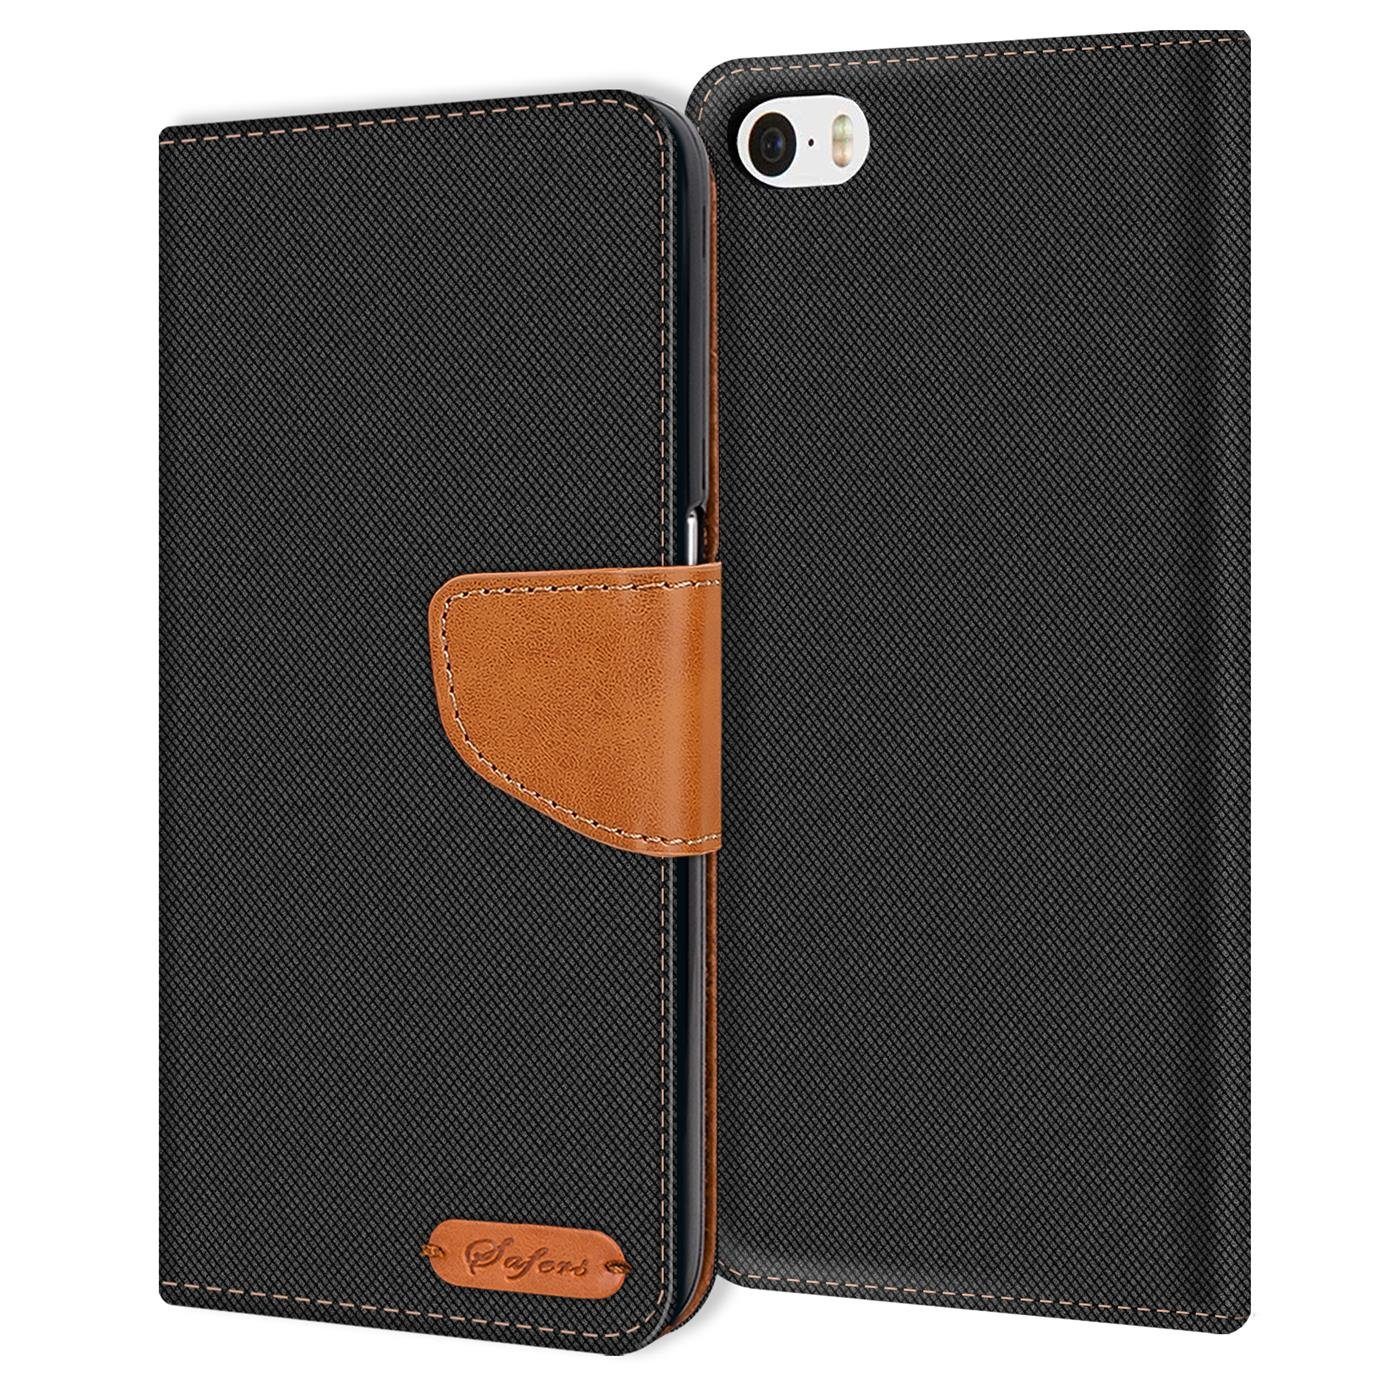 CoolGadget Handyhülle »Denim Schutzhülle Flip Case« für Apple iPhone 4 / 4S  3,5 Zoll, Book Cover Handy Tasche Hülle für iPhone 4s Klapphülle online  kaufen | OTTO